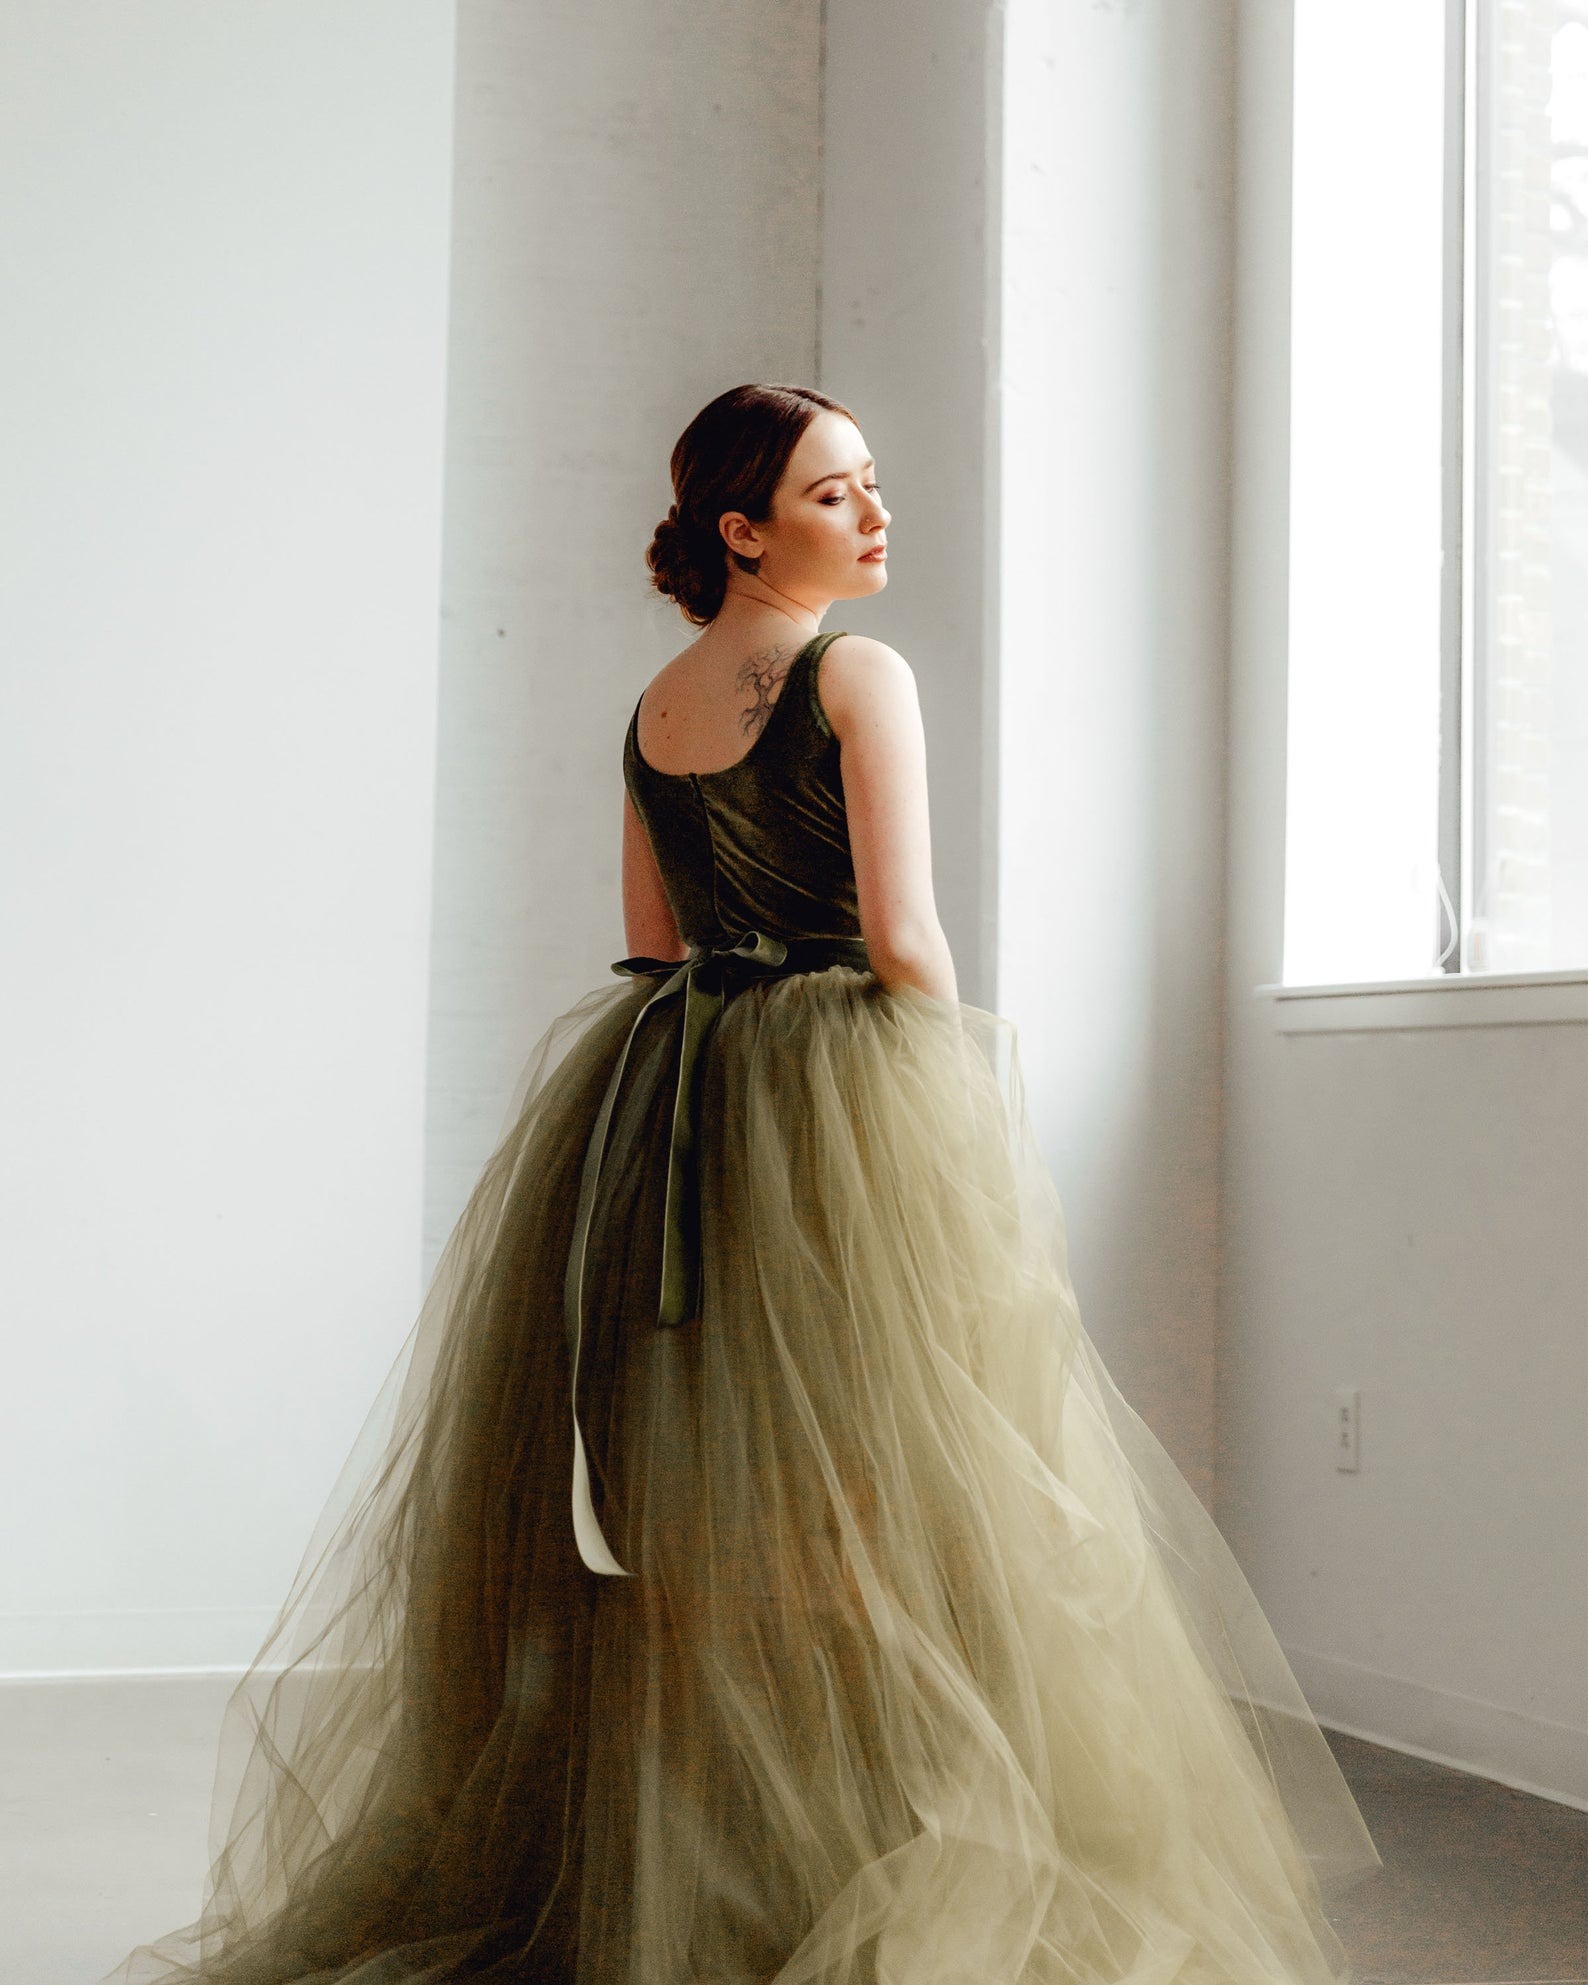 olive green tulle online wedding dress from Sweet Caroline Styles on Etsy